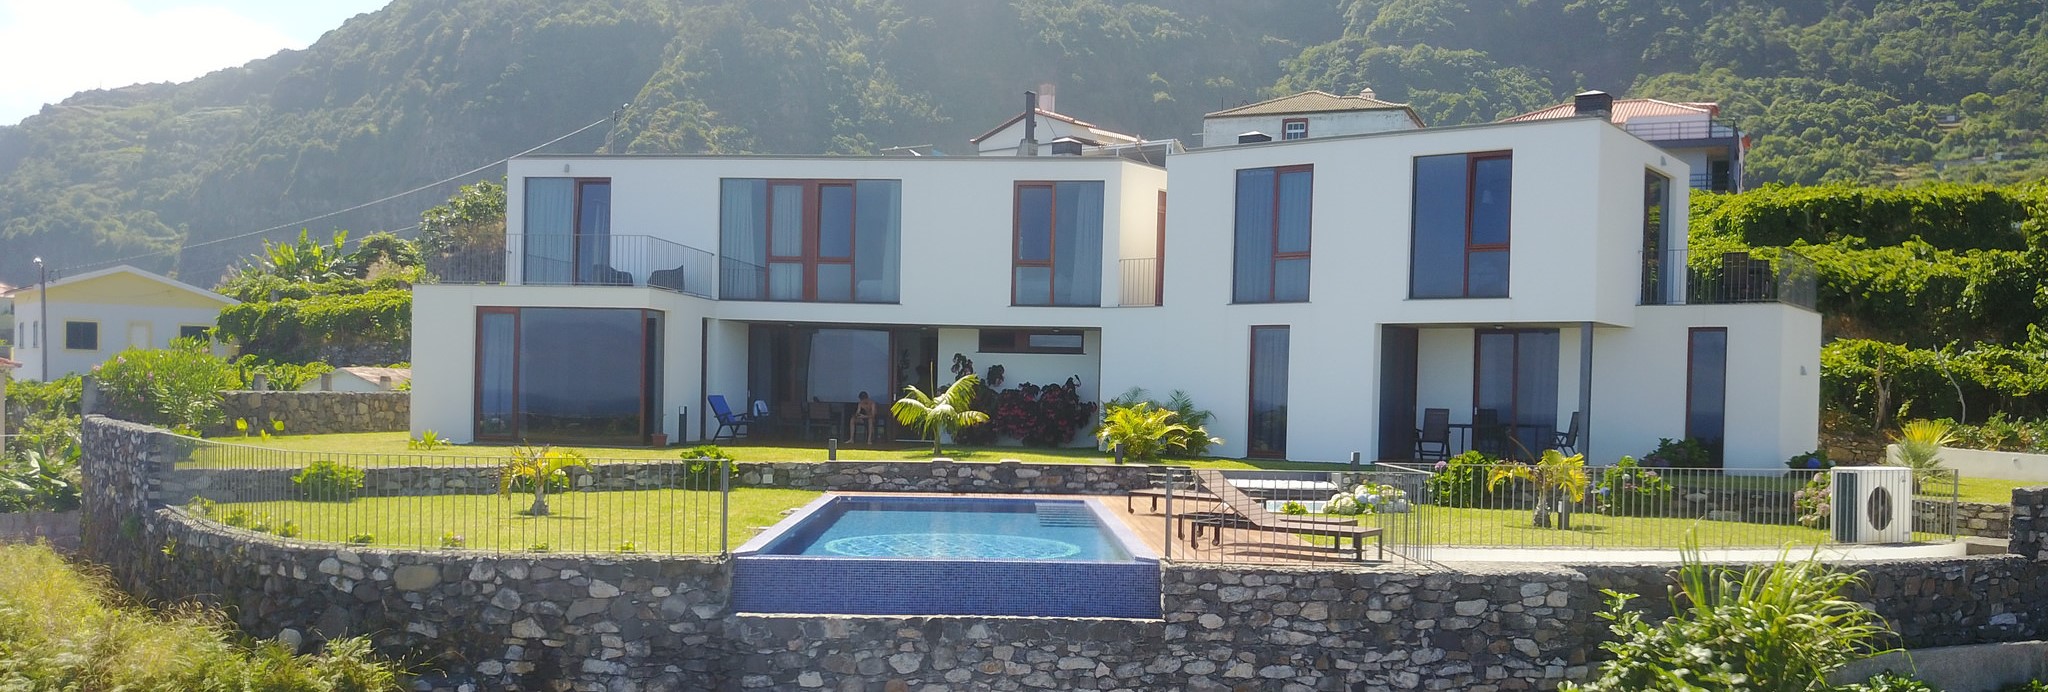 casa do miradouro madere vacances villa luxe location villegiature piscine